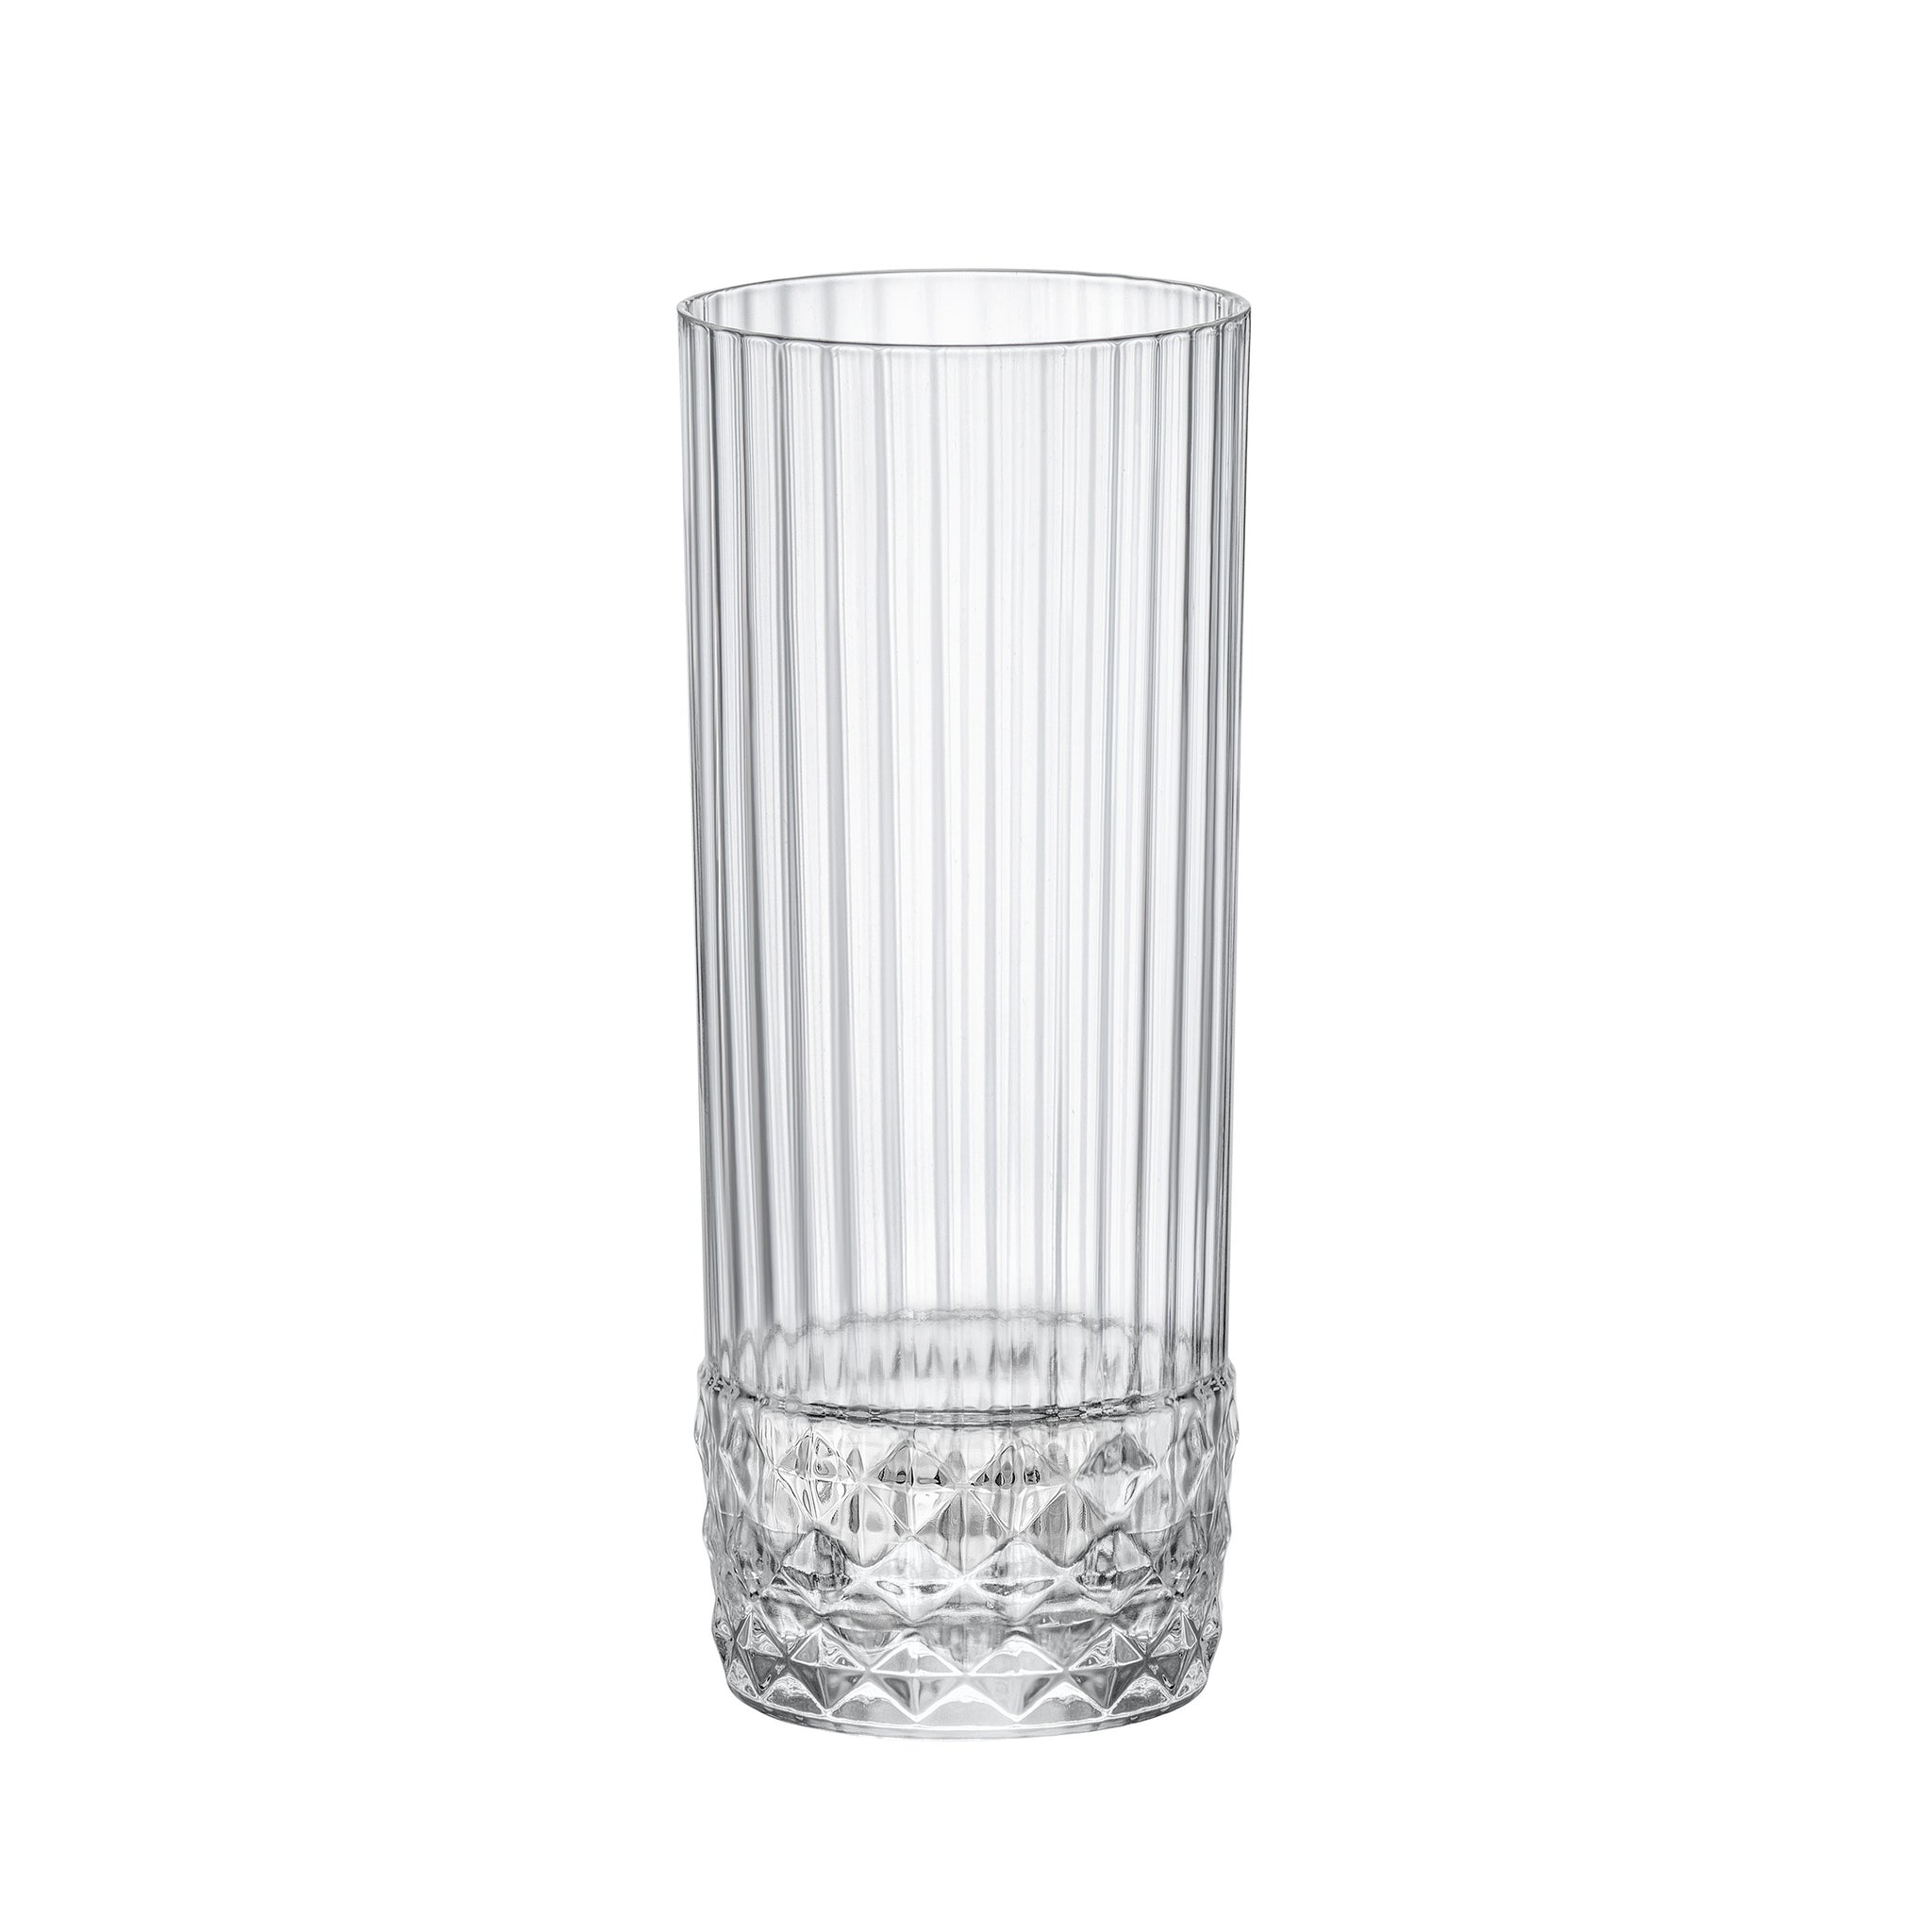 America '20s 13.5 oz. Long Drink Drinking Glasses (Set of 4)